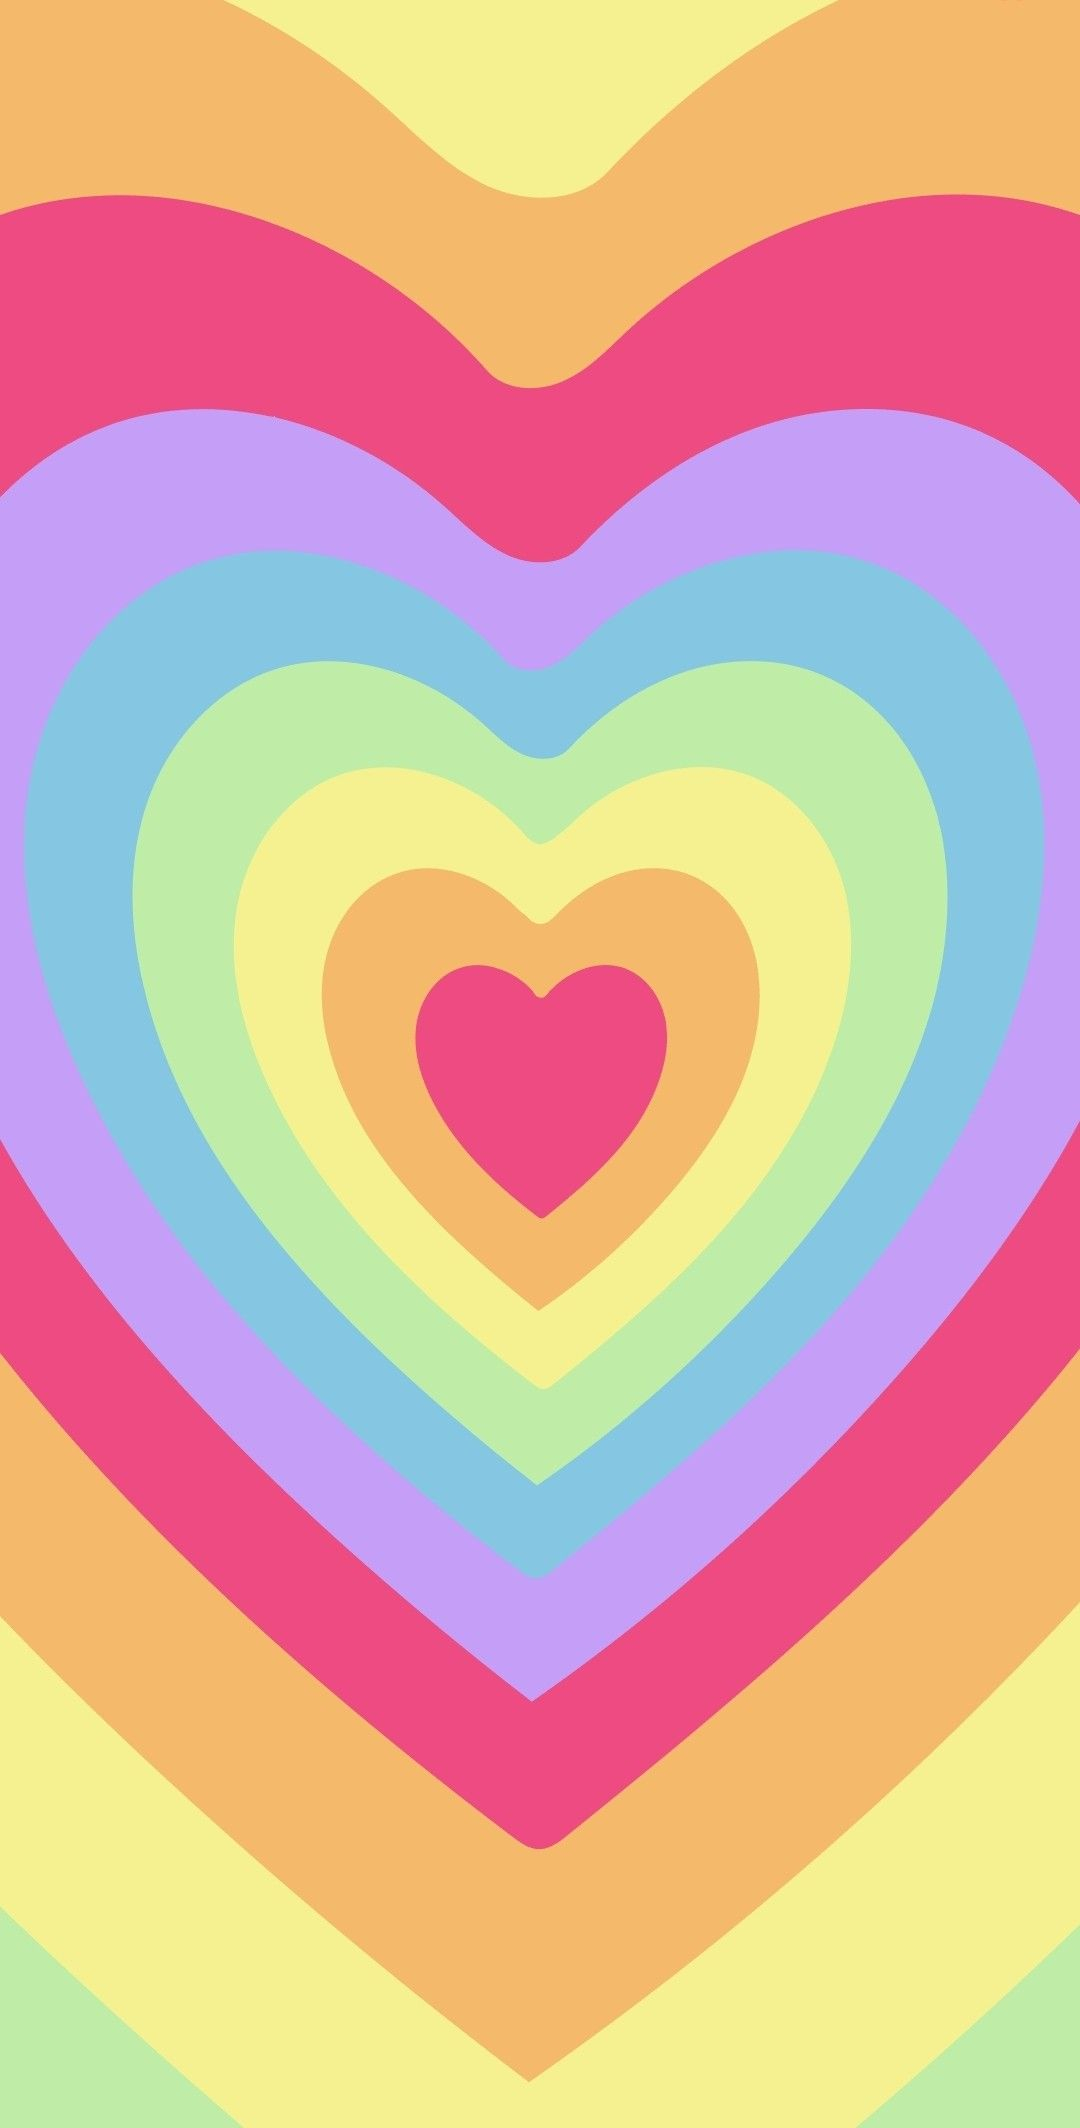 1080x2128 54 Powrpuff girls hearts wallpapers ideas | heart wallpaper, wallpaper, heart background